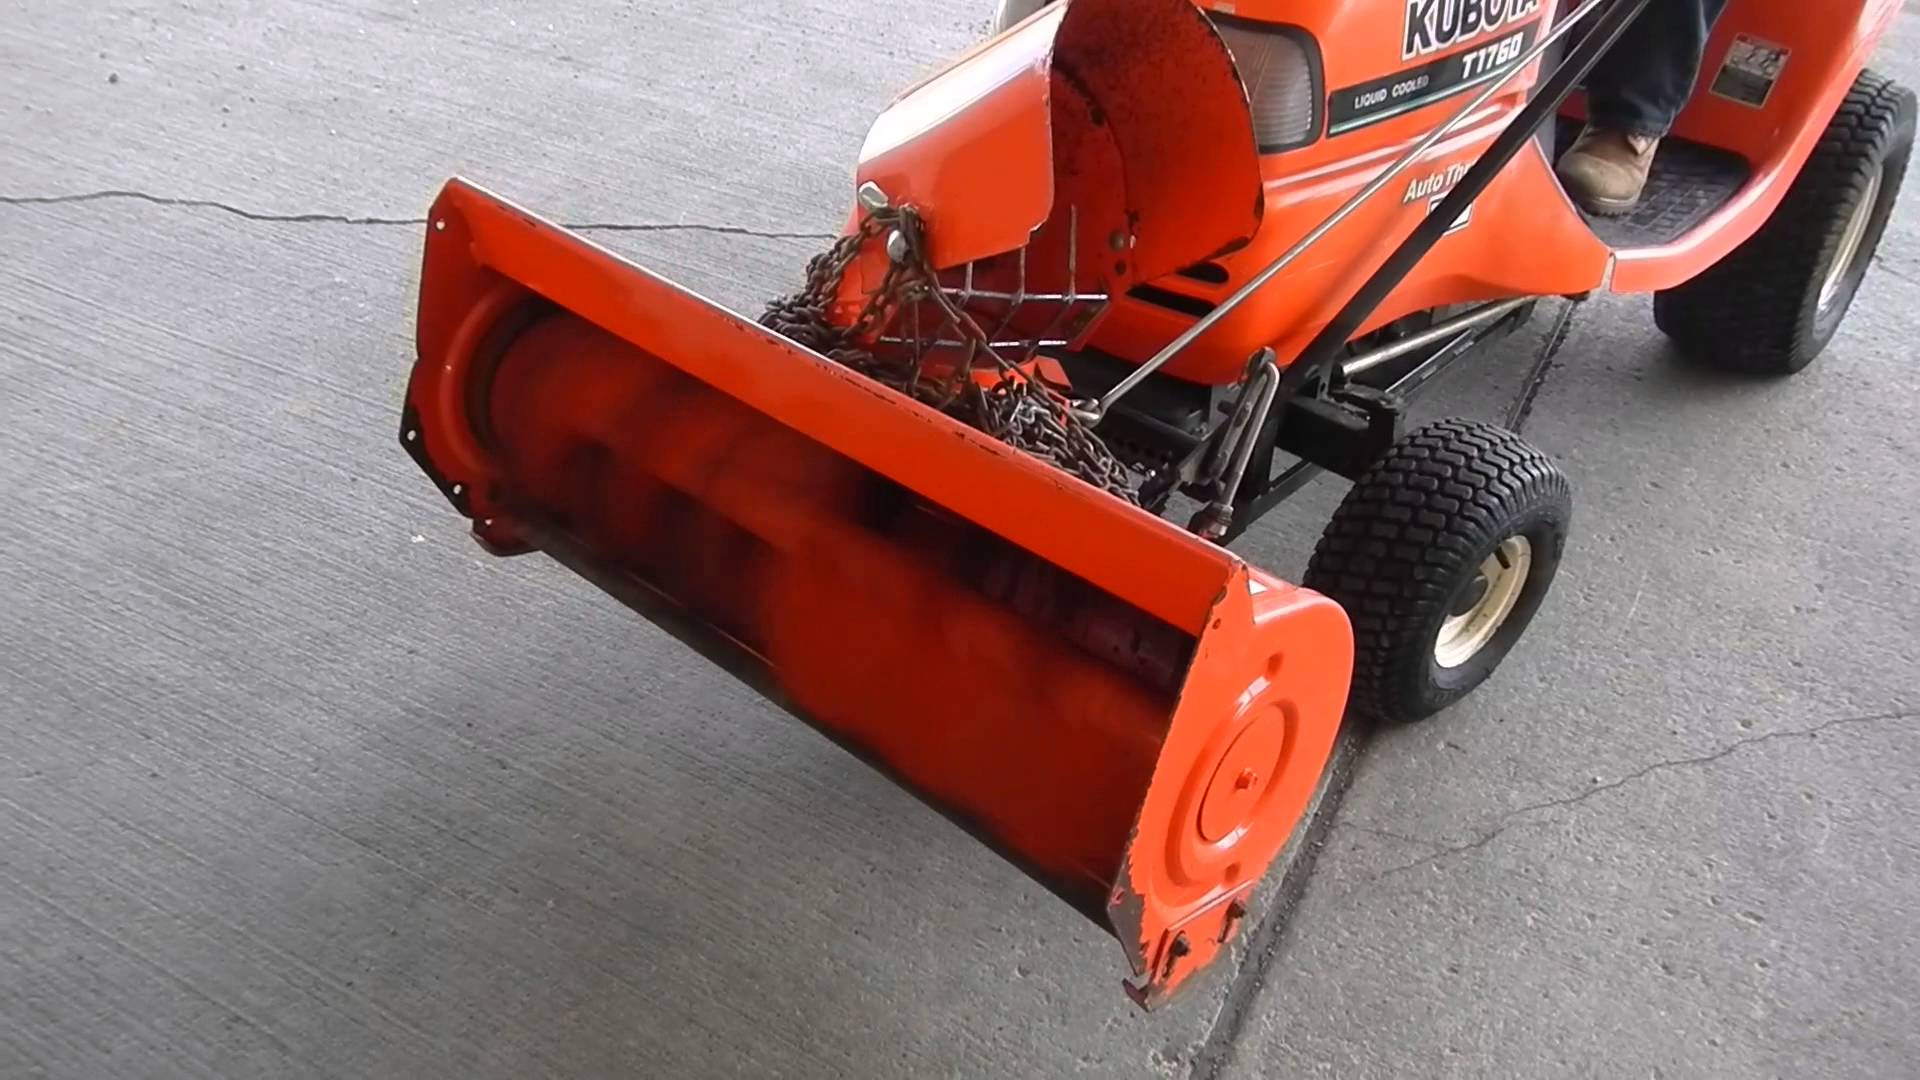 Kubota Model T1760 Lawn Mower with Snow Thrower Model T2738 - YouTube